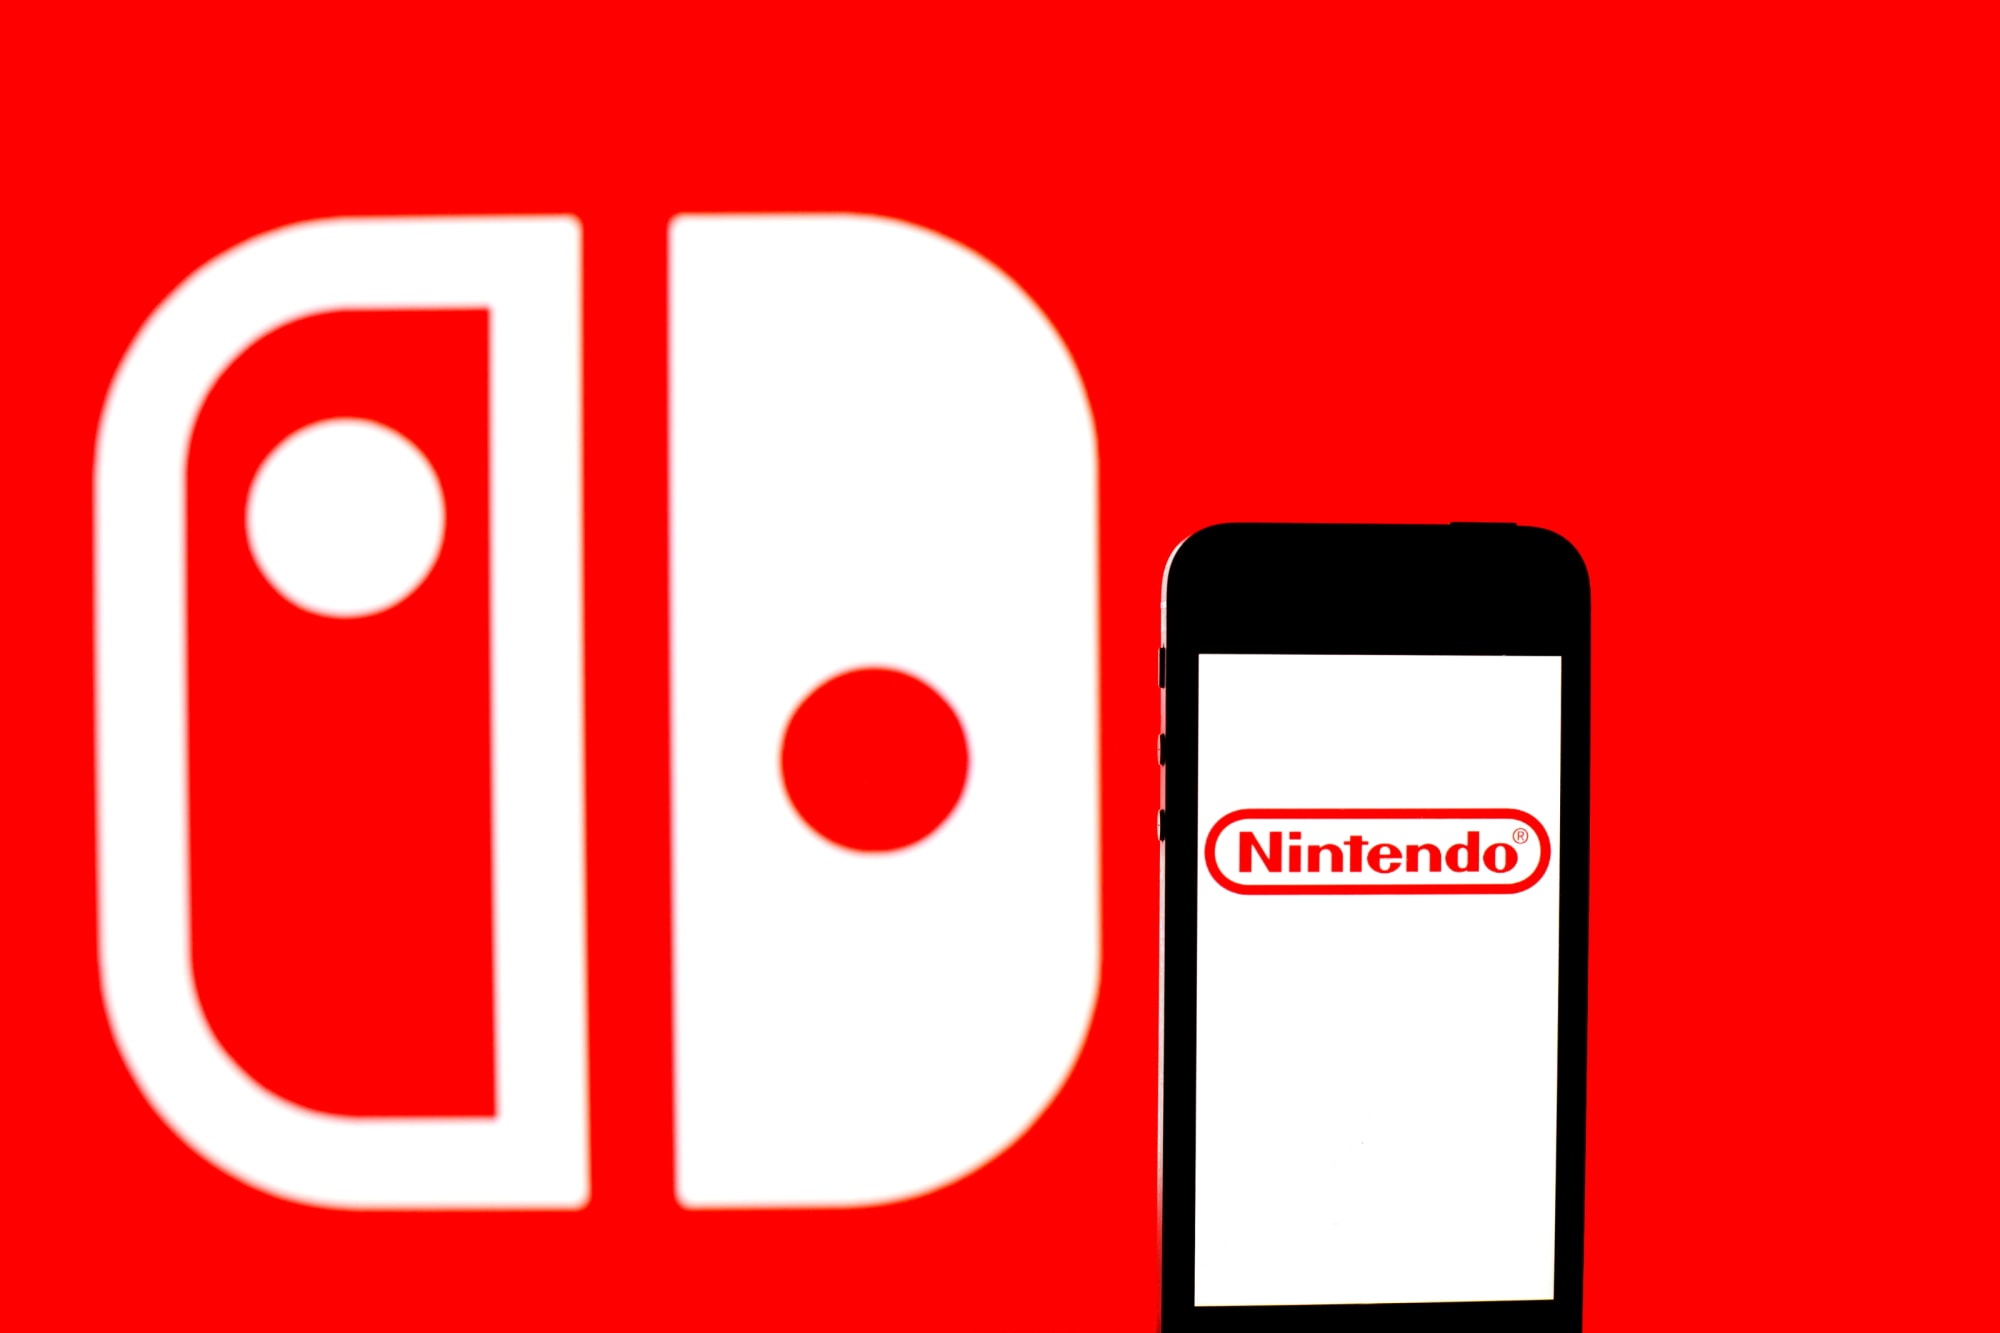 Nintendo Switch Cyber Deals brings discounts to dozens of digital games